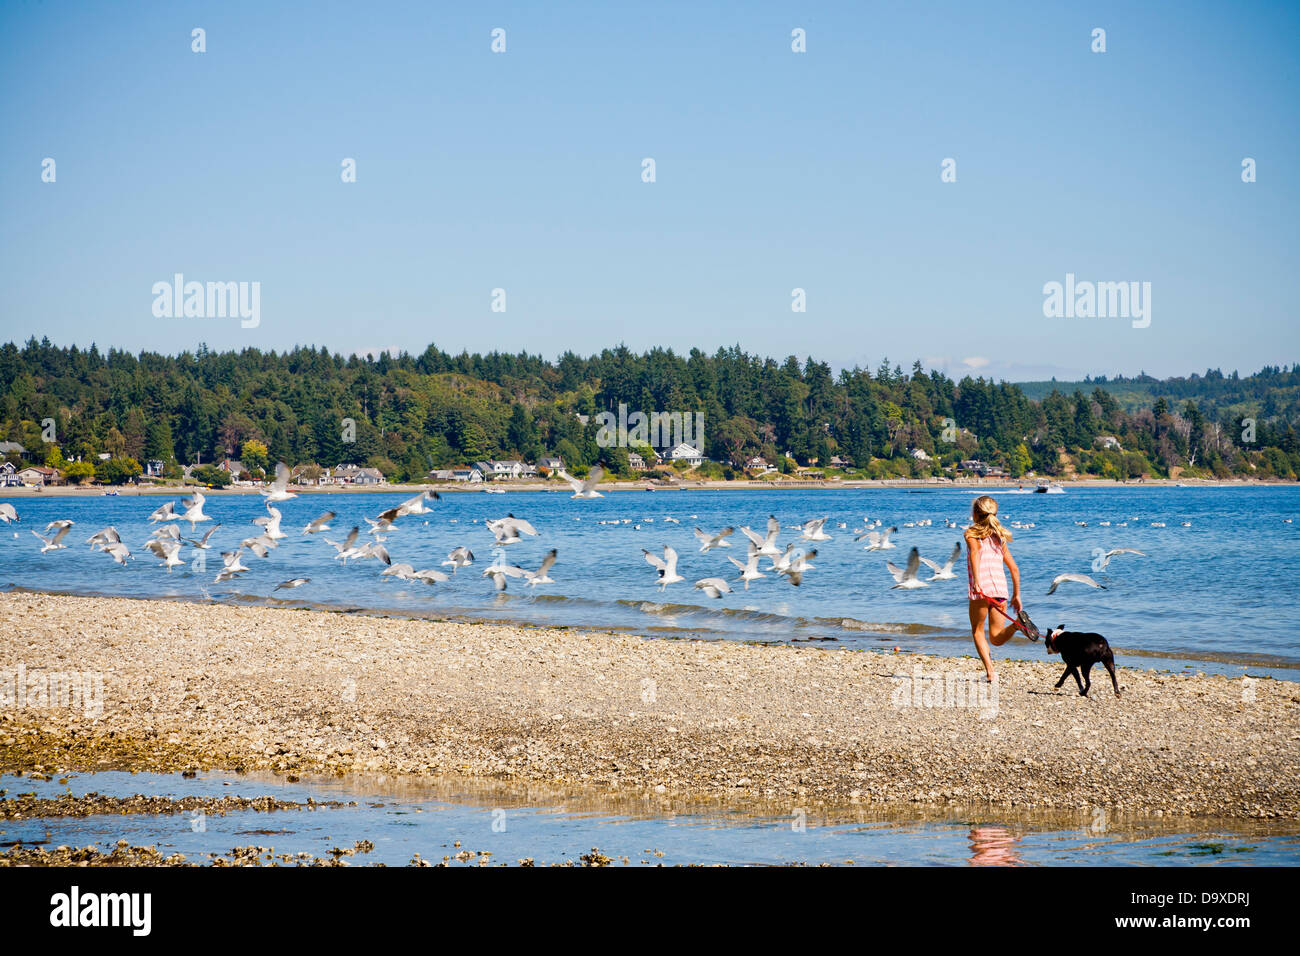 Young girl chasing gulls on beach Stock Photo